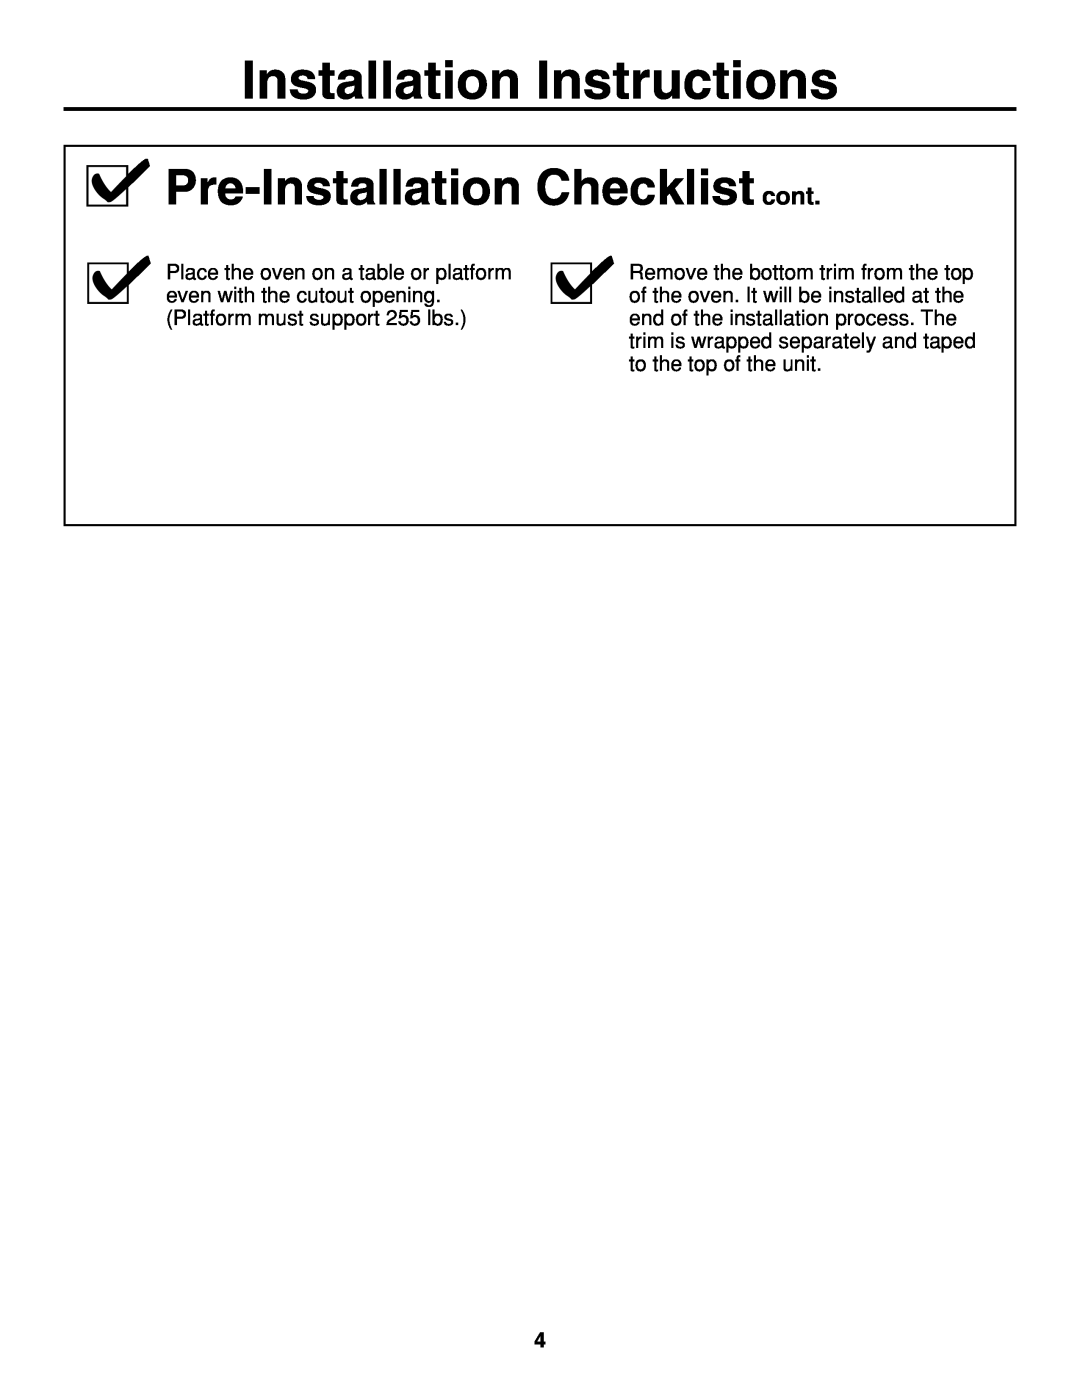 GE JTP86 installation instructions Pre-Installation Checklist cont, Installation Instructions 